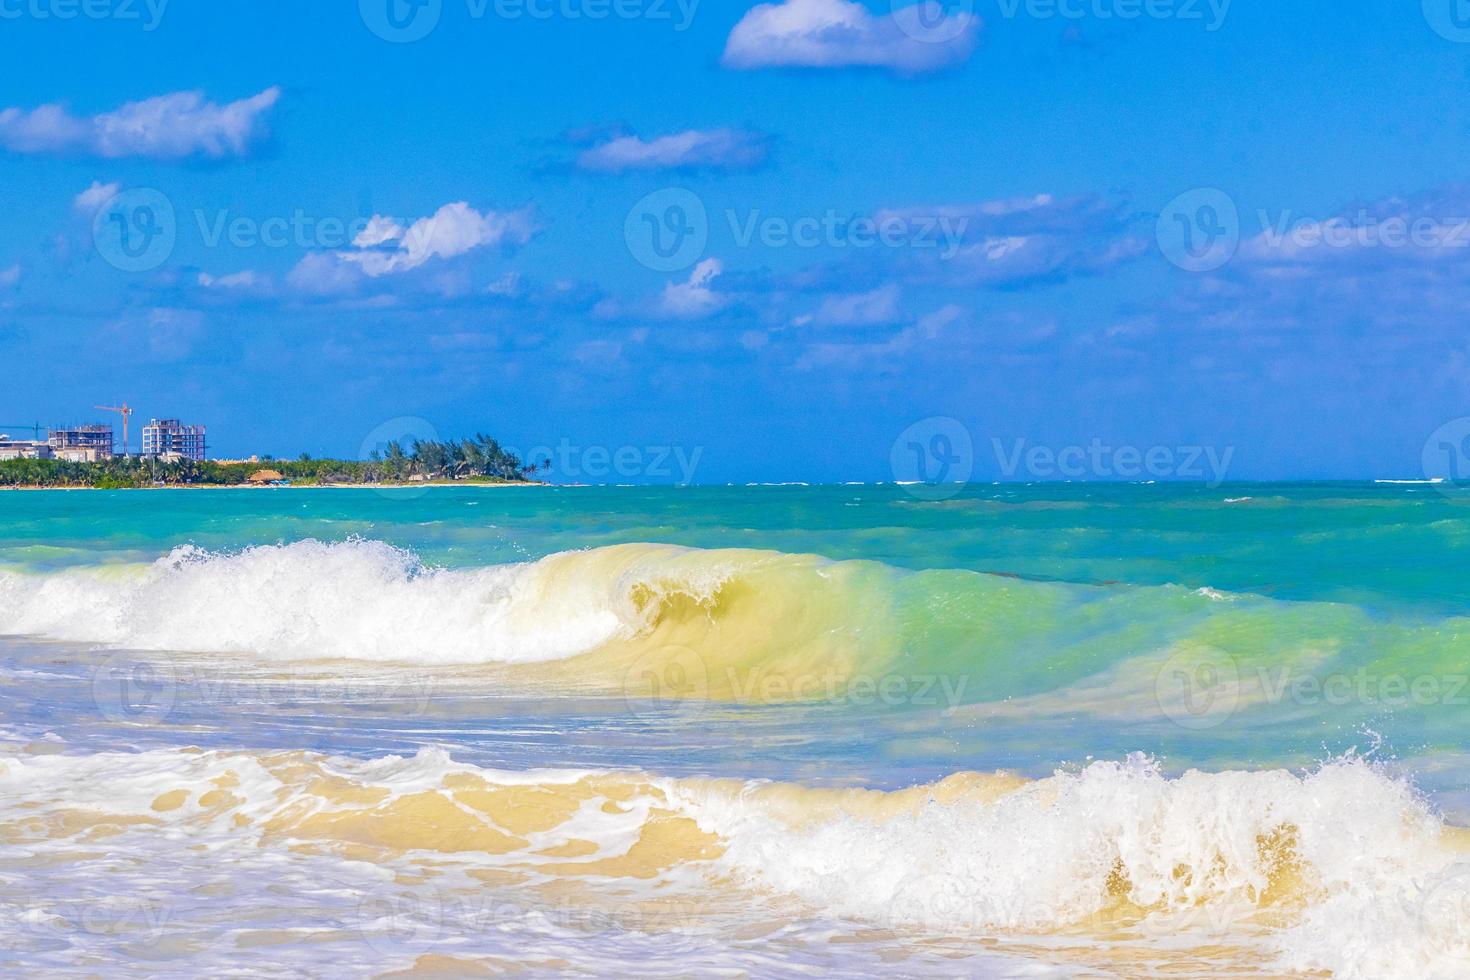 playa tropical mexicana olas agua turquesa playa del carmen mexico. foto